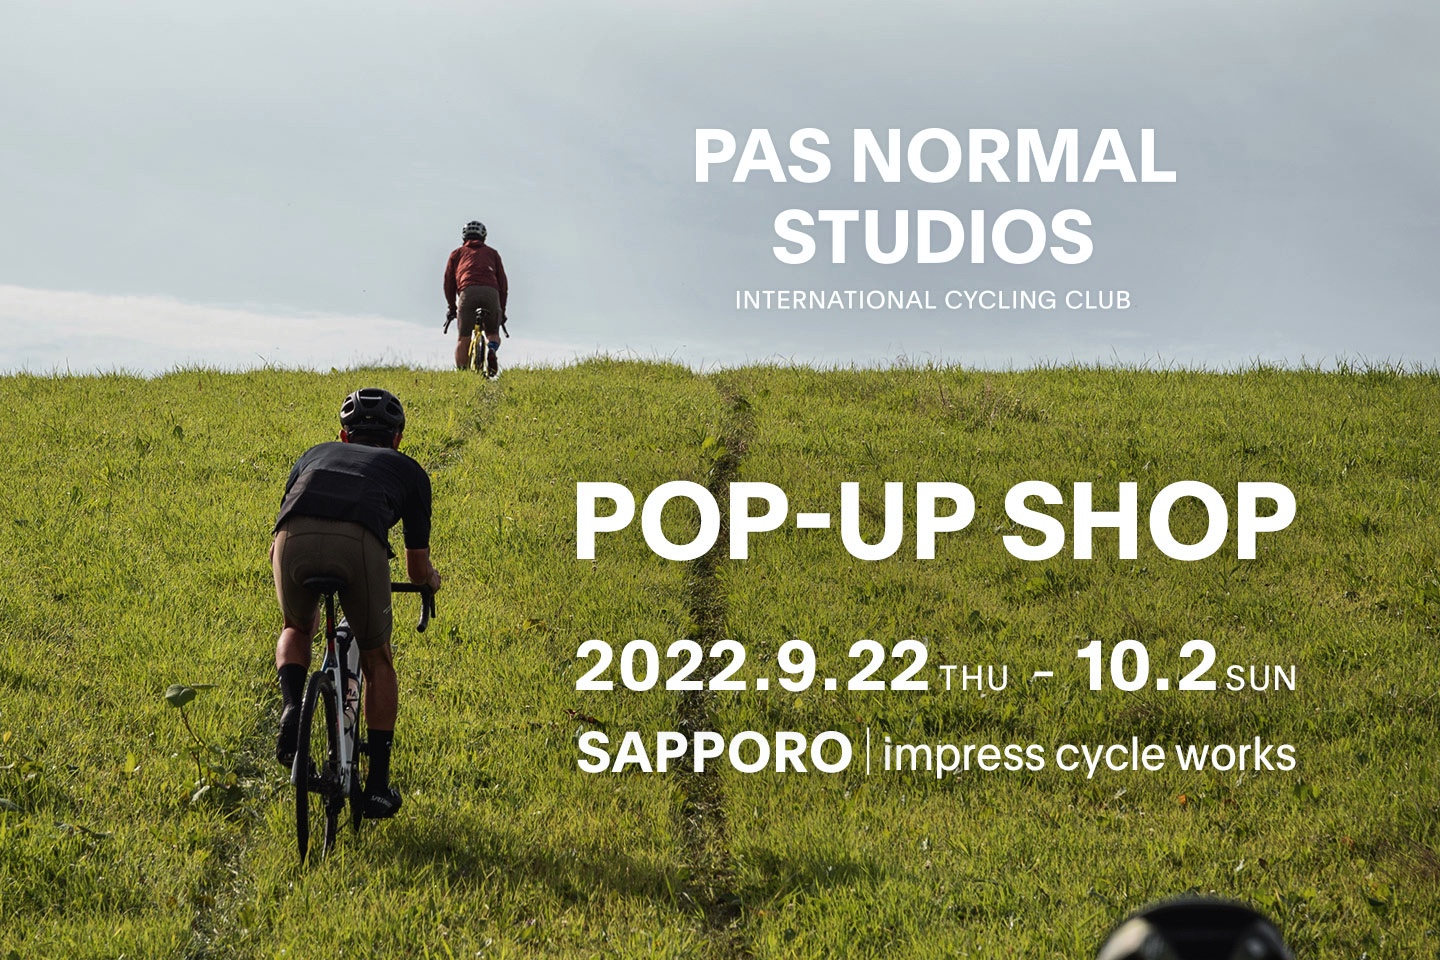 PAS NORMAL STUDIOS POP-UP SHOP in SAPPORO